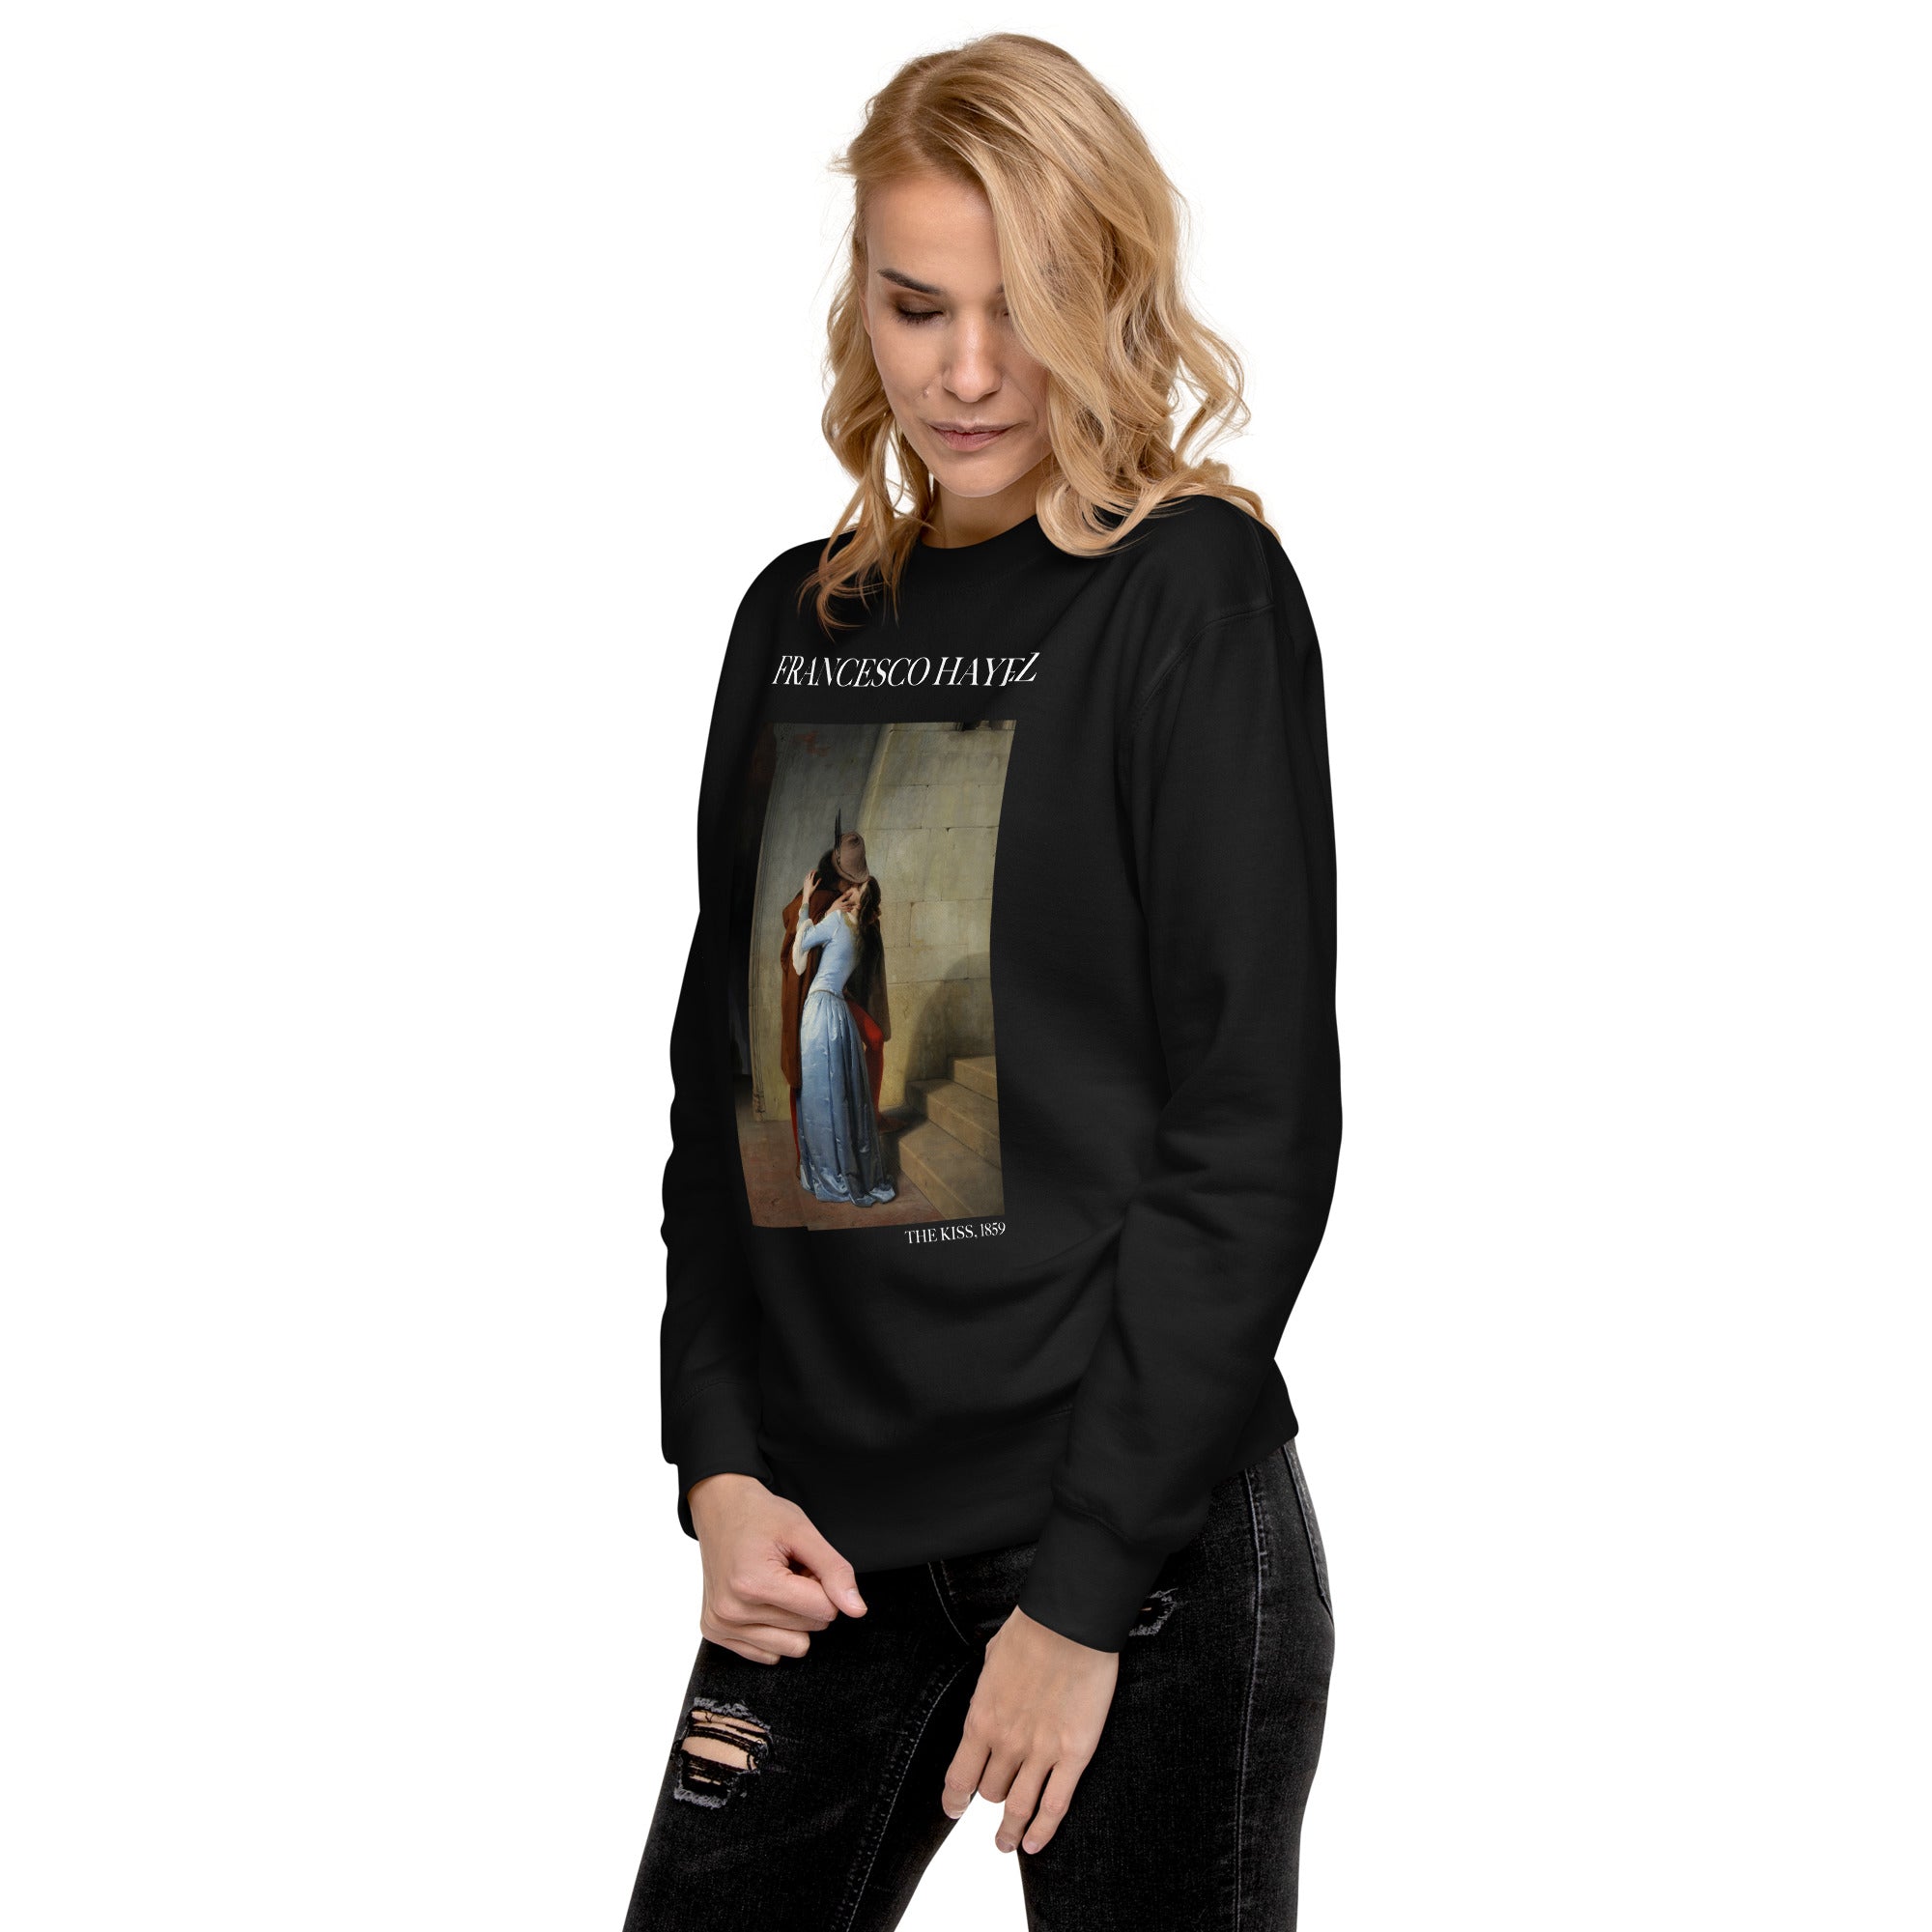 Francesco Hayez 'The Kiss' Famous Painting Sweatshirt | Unisex Premium Sweatshirt